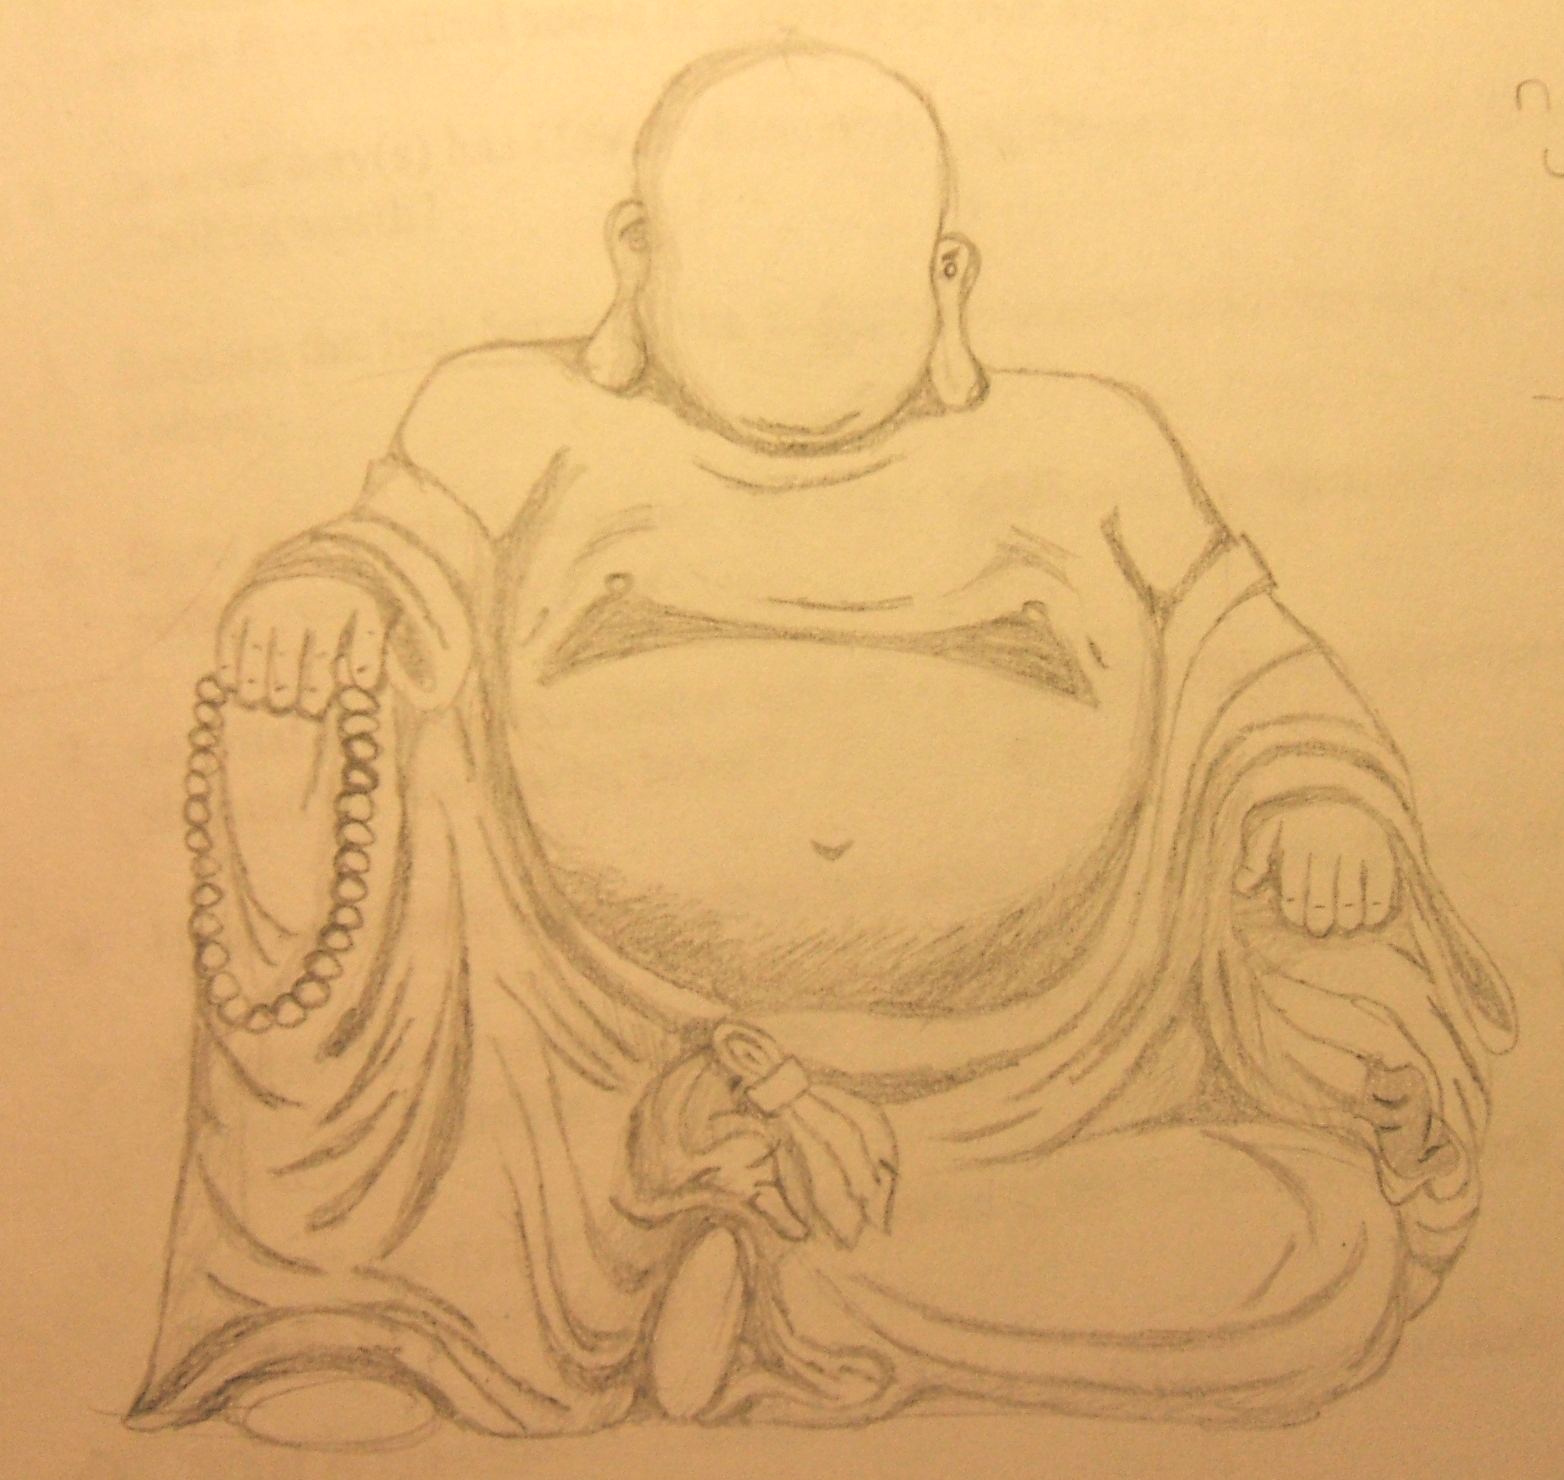 Faceless Buddha by blackdragon1991